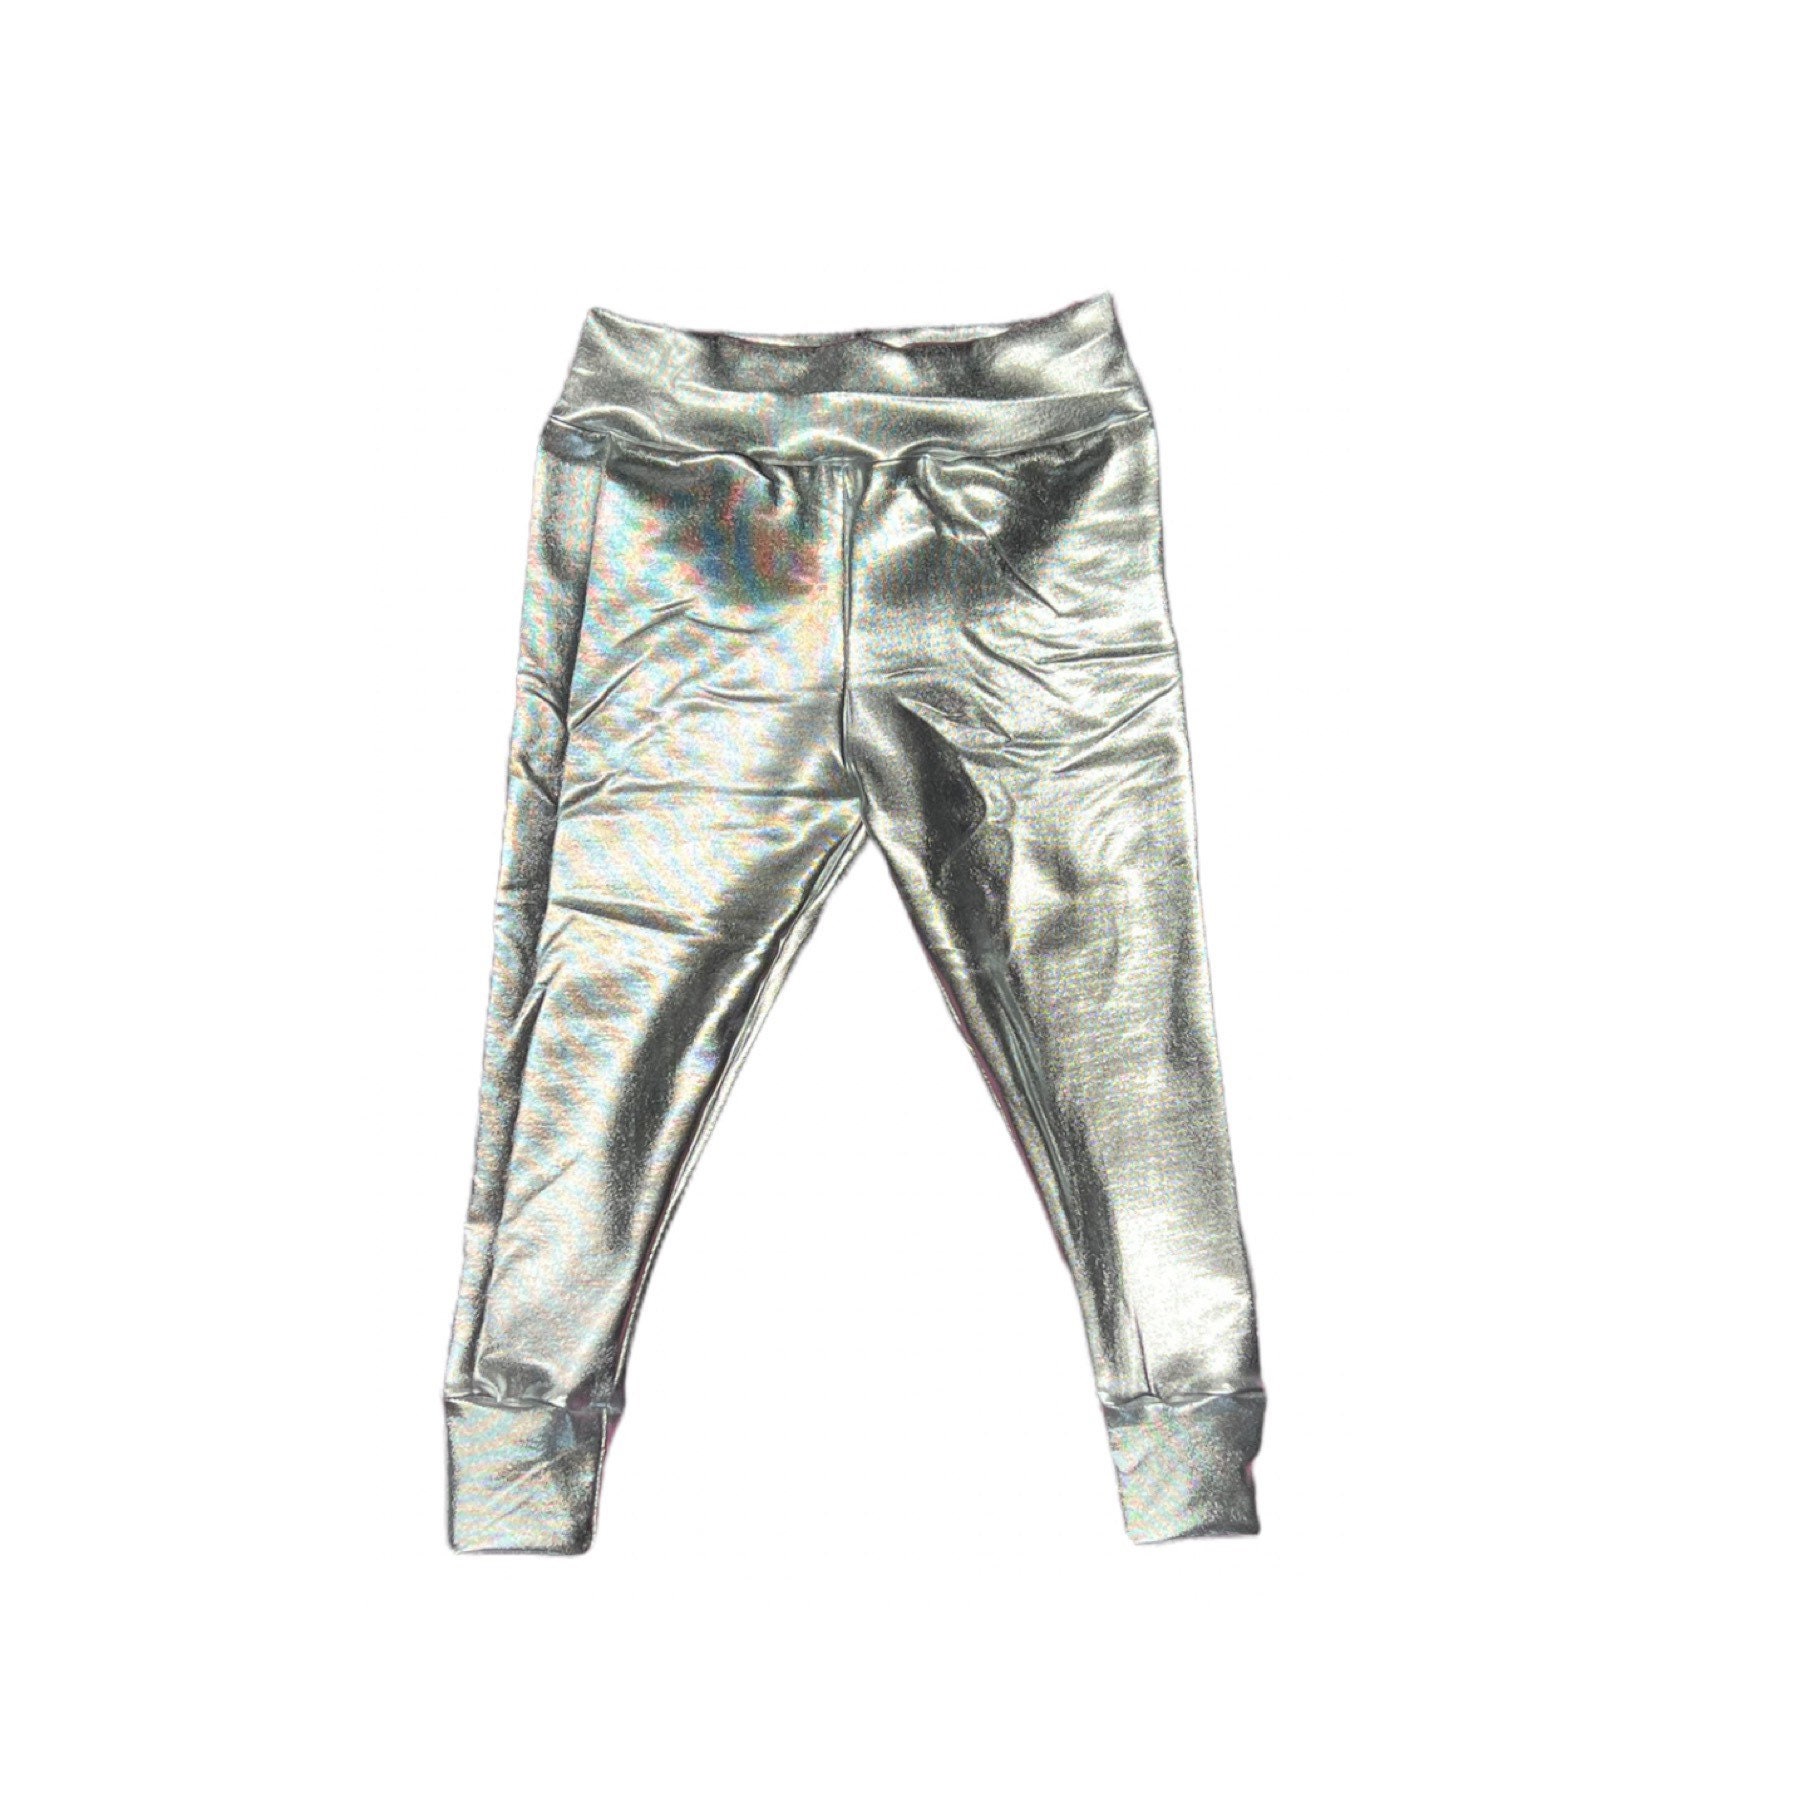 Top more than 135 grey metallic leggings